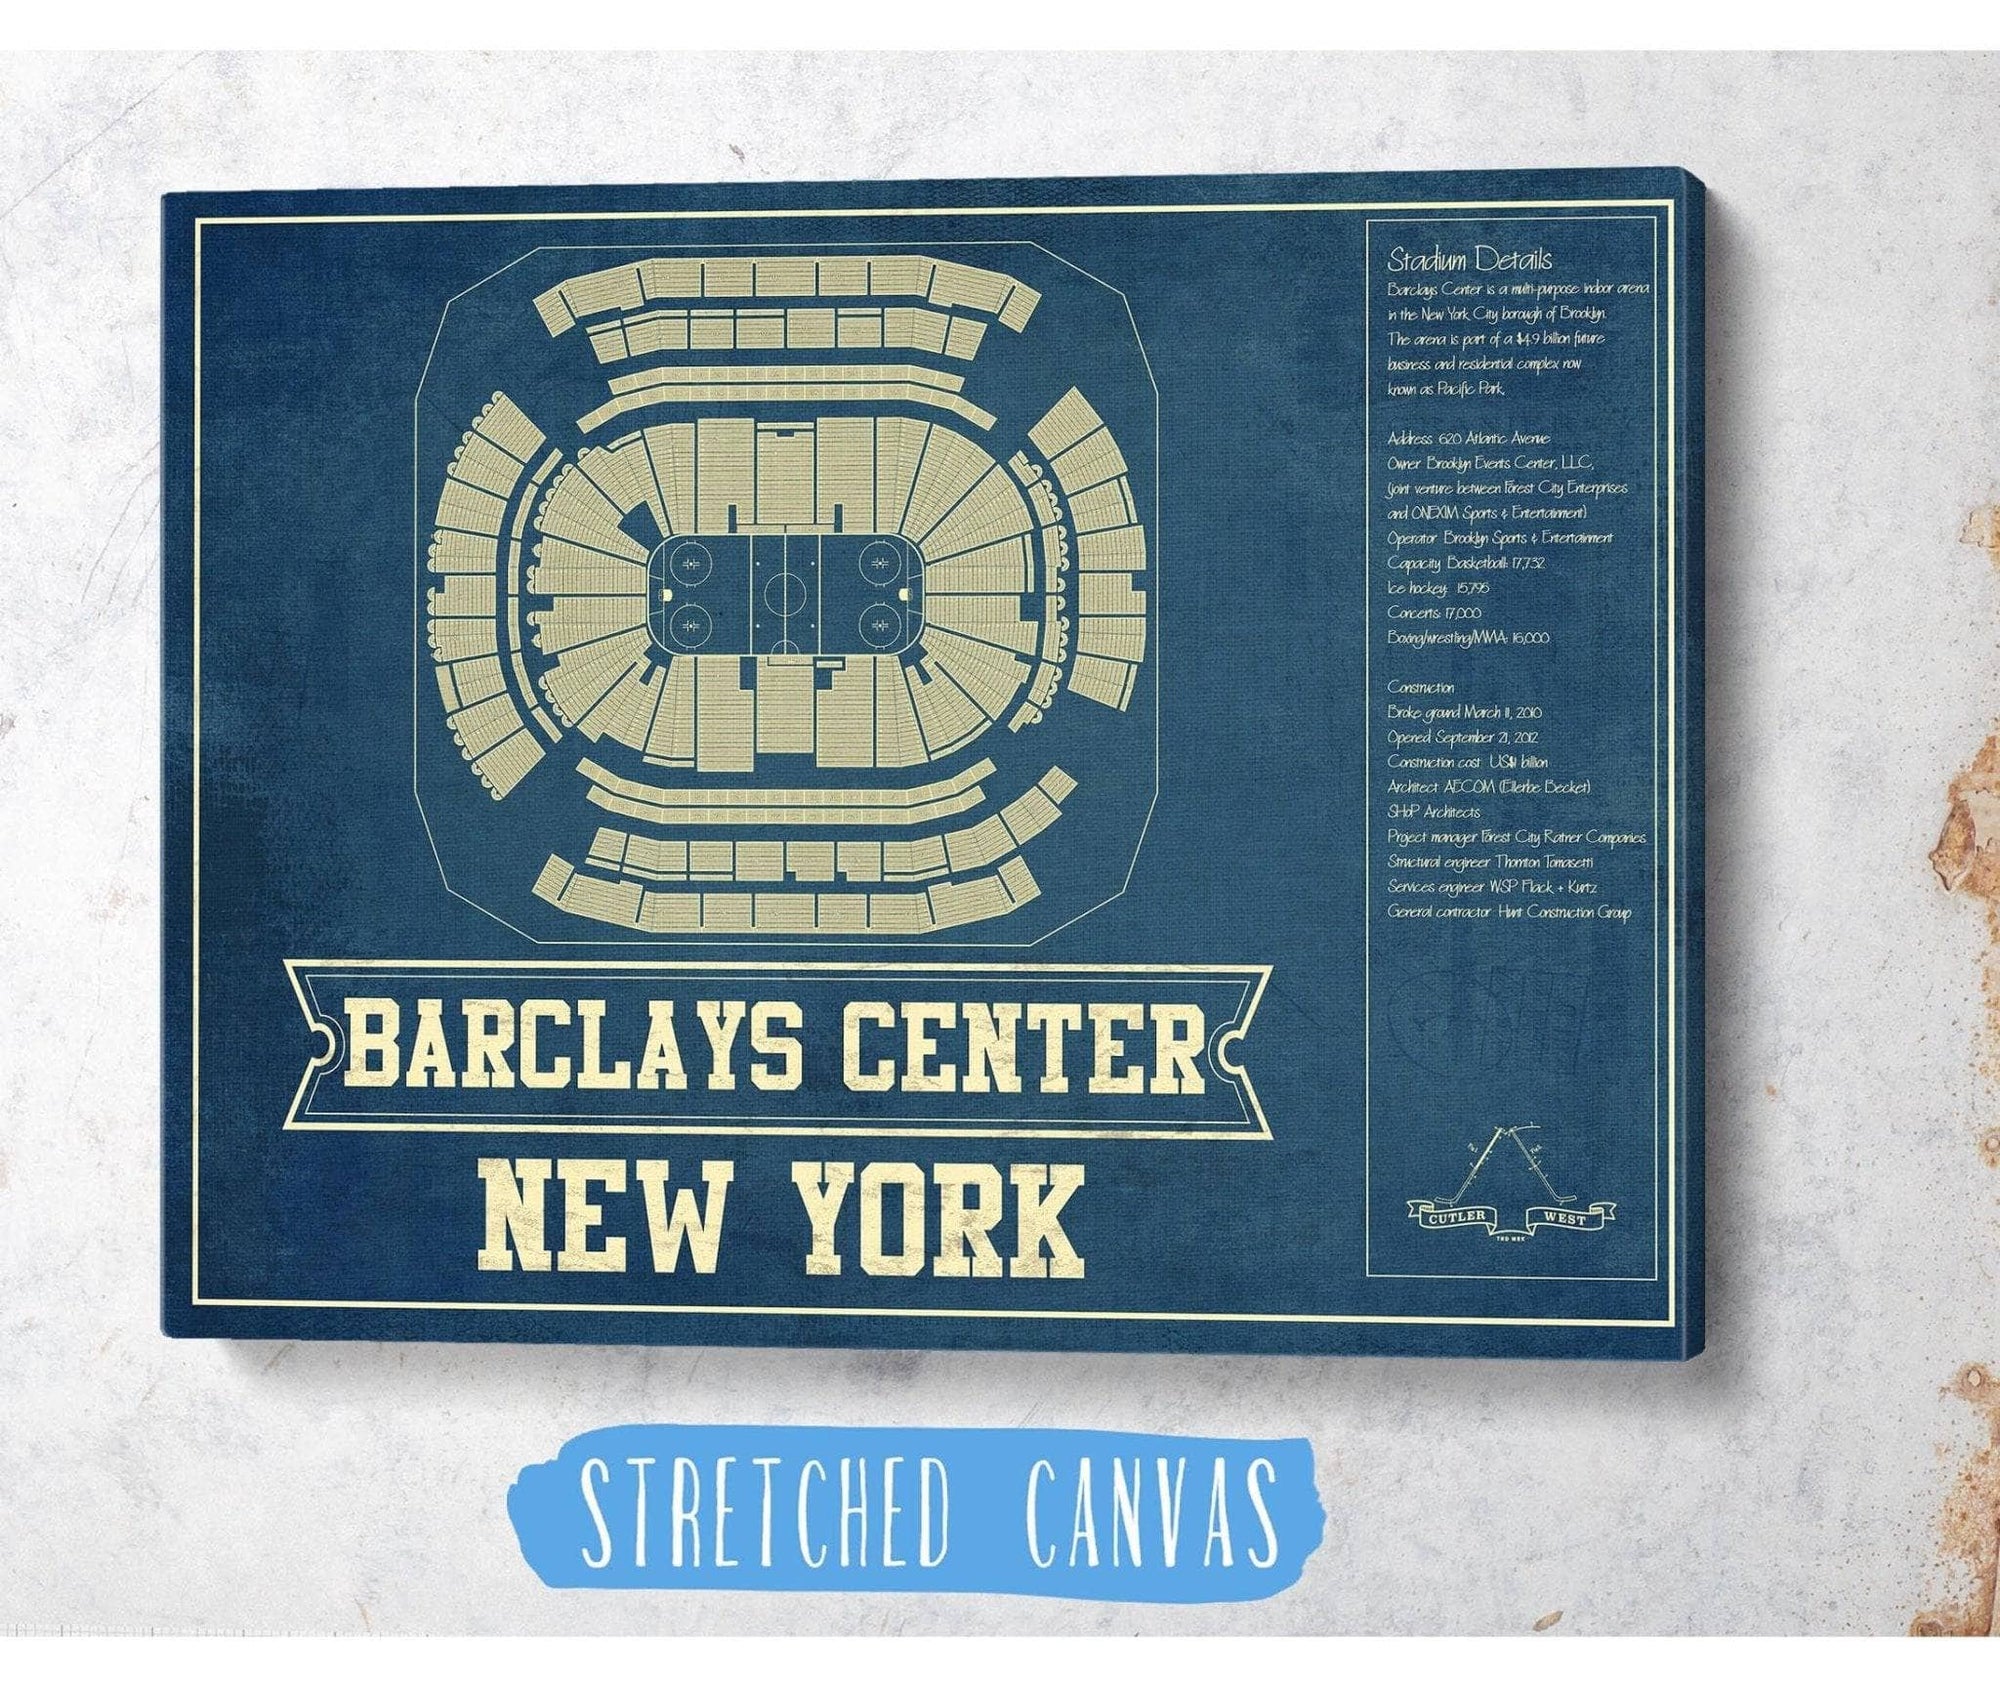 New York Islanders Poster, New York Islanders Hockey Print